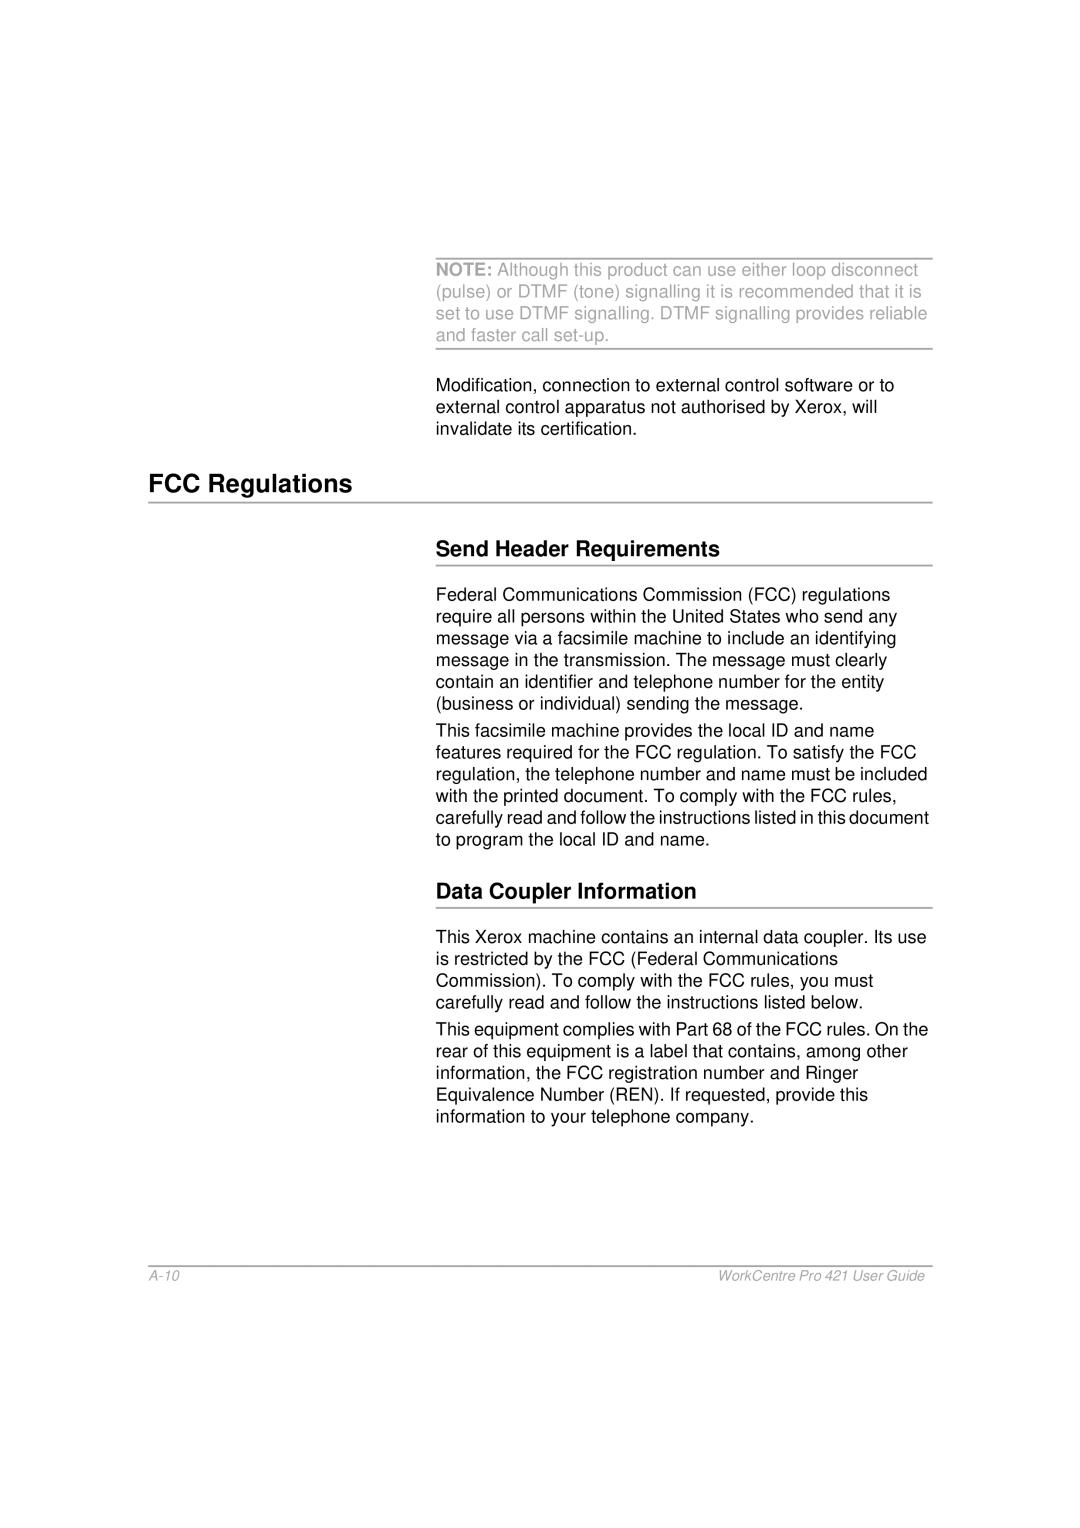 Xerox 421 manual FCC Regulations, Send Header Requirements, Data Coupler Information 